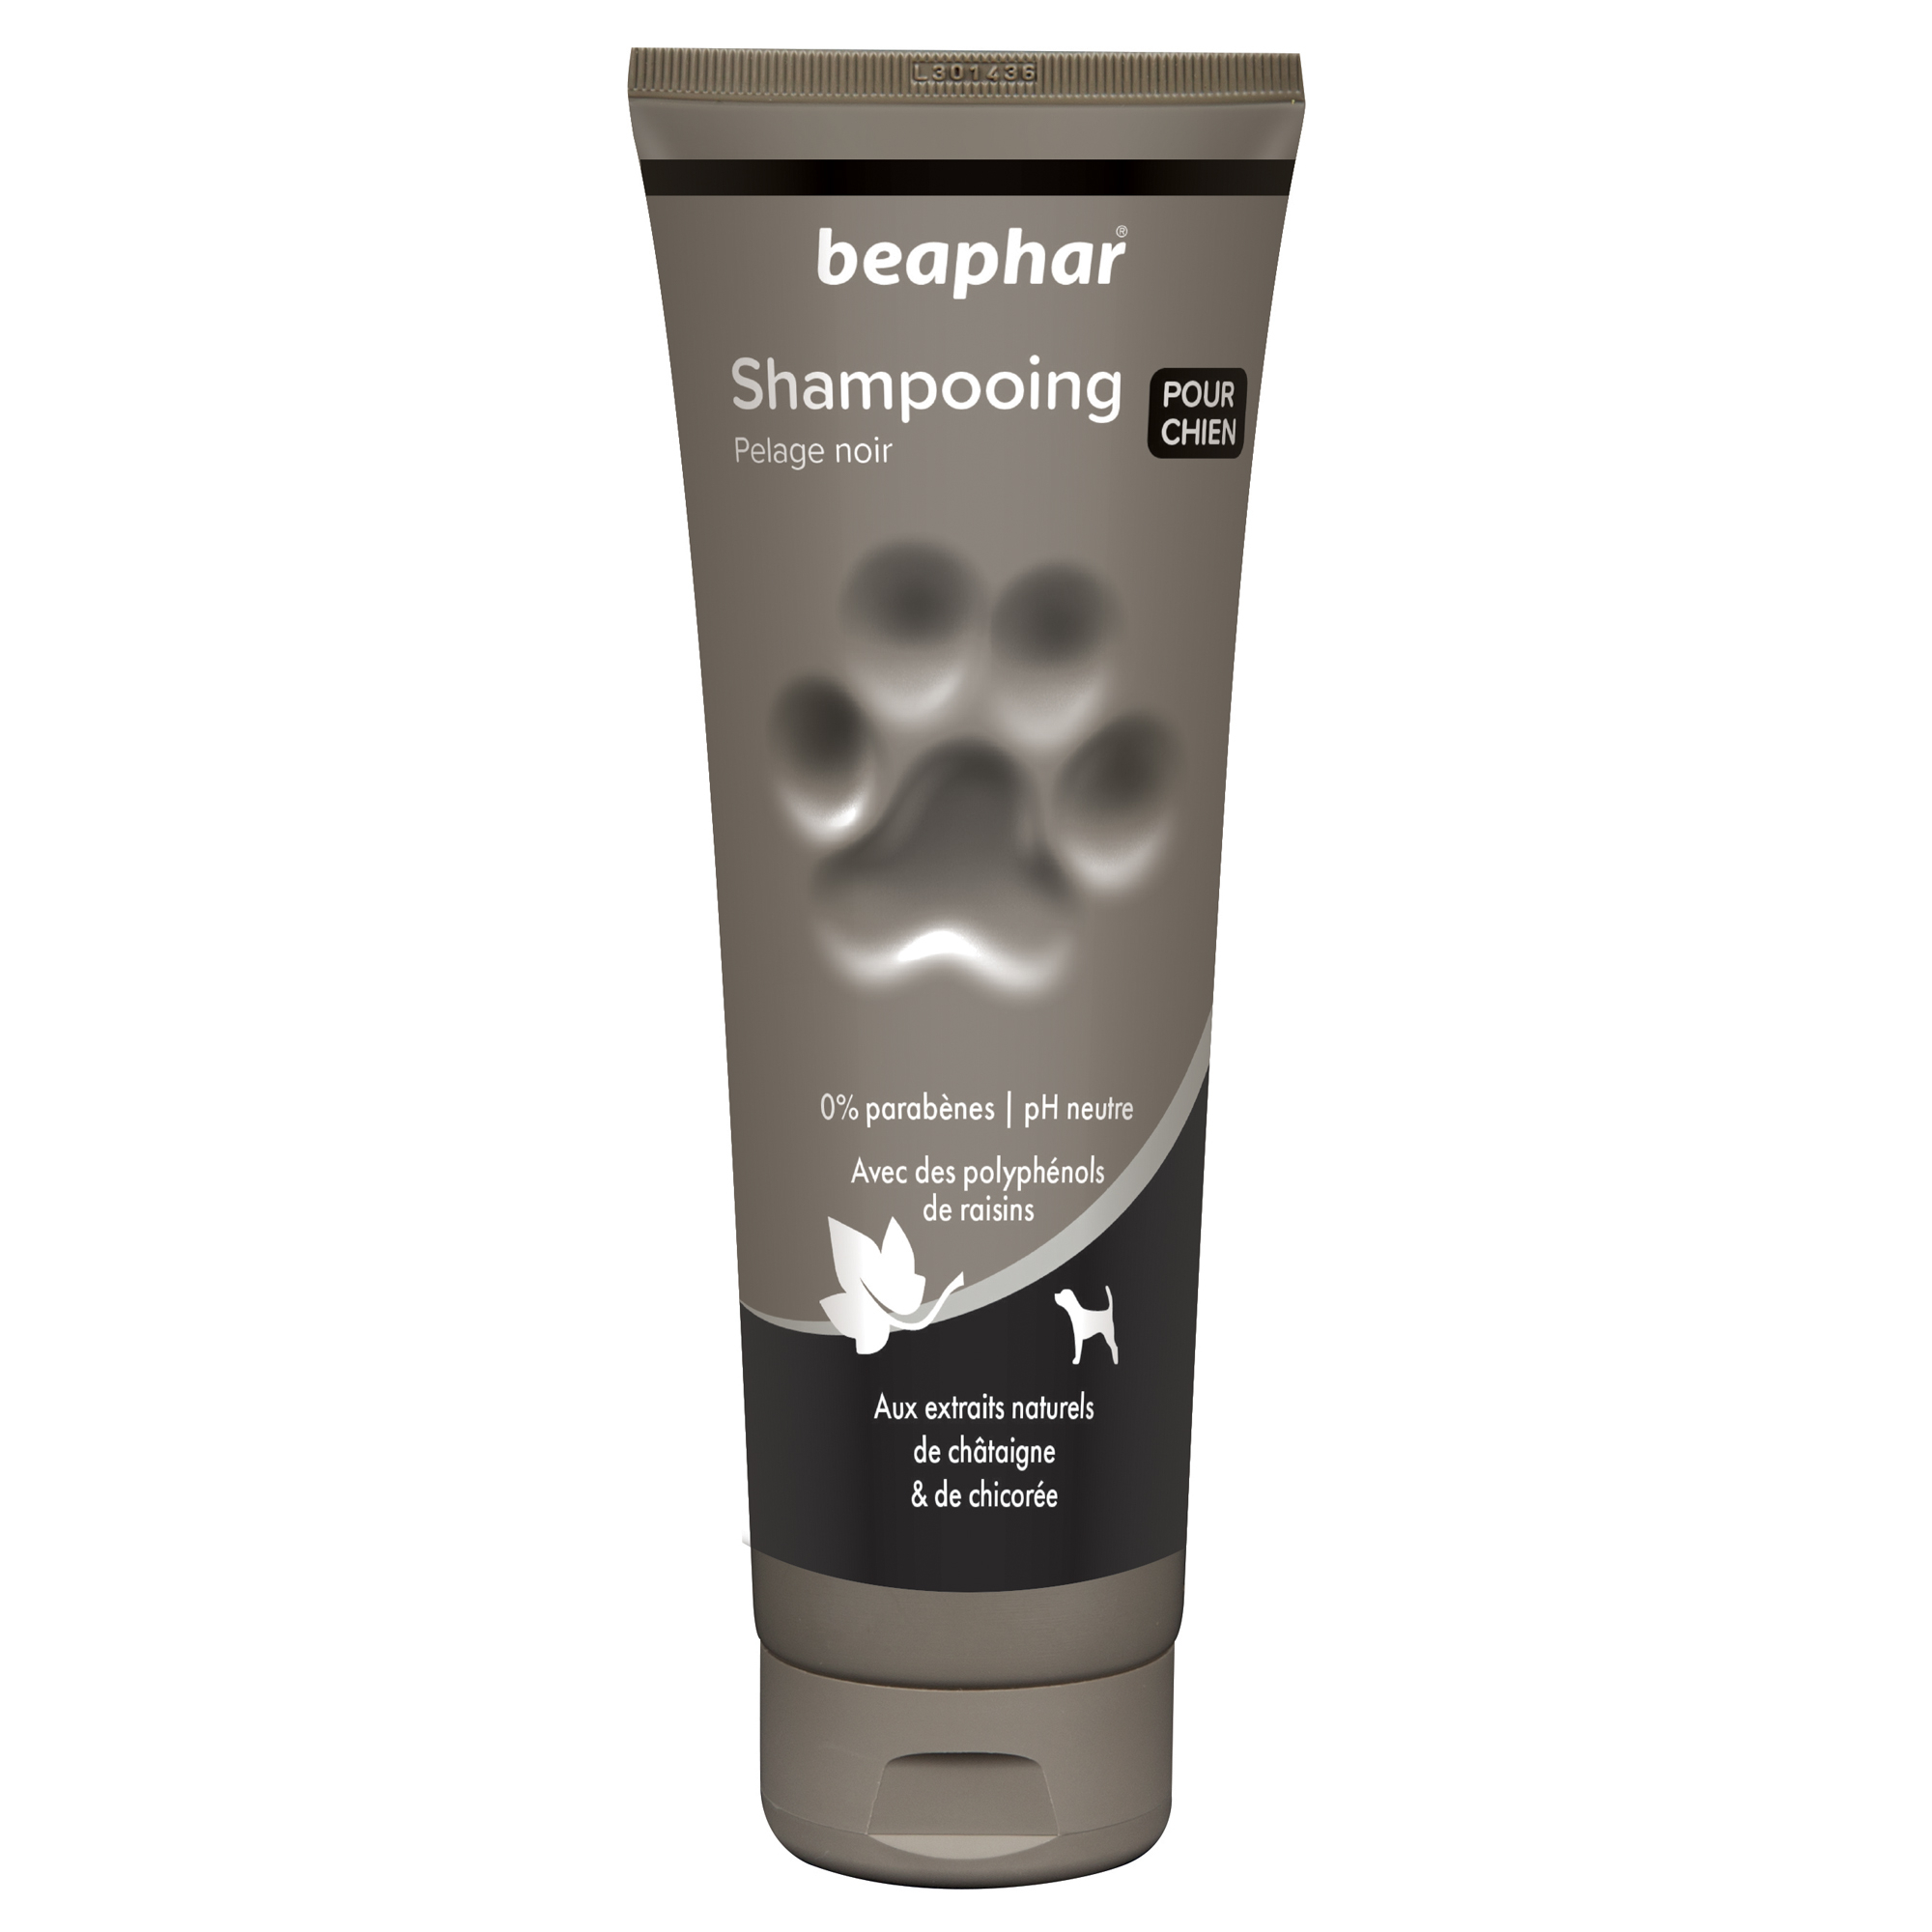 Shampoo speziell für schwarzes Fell